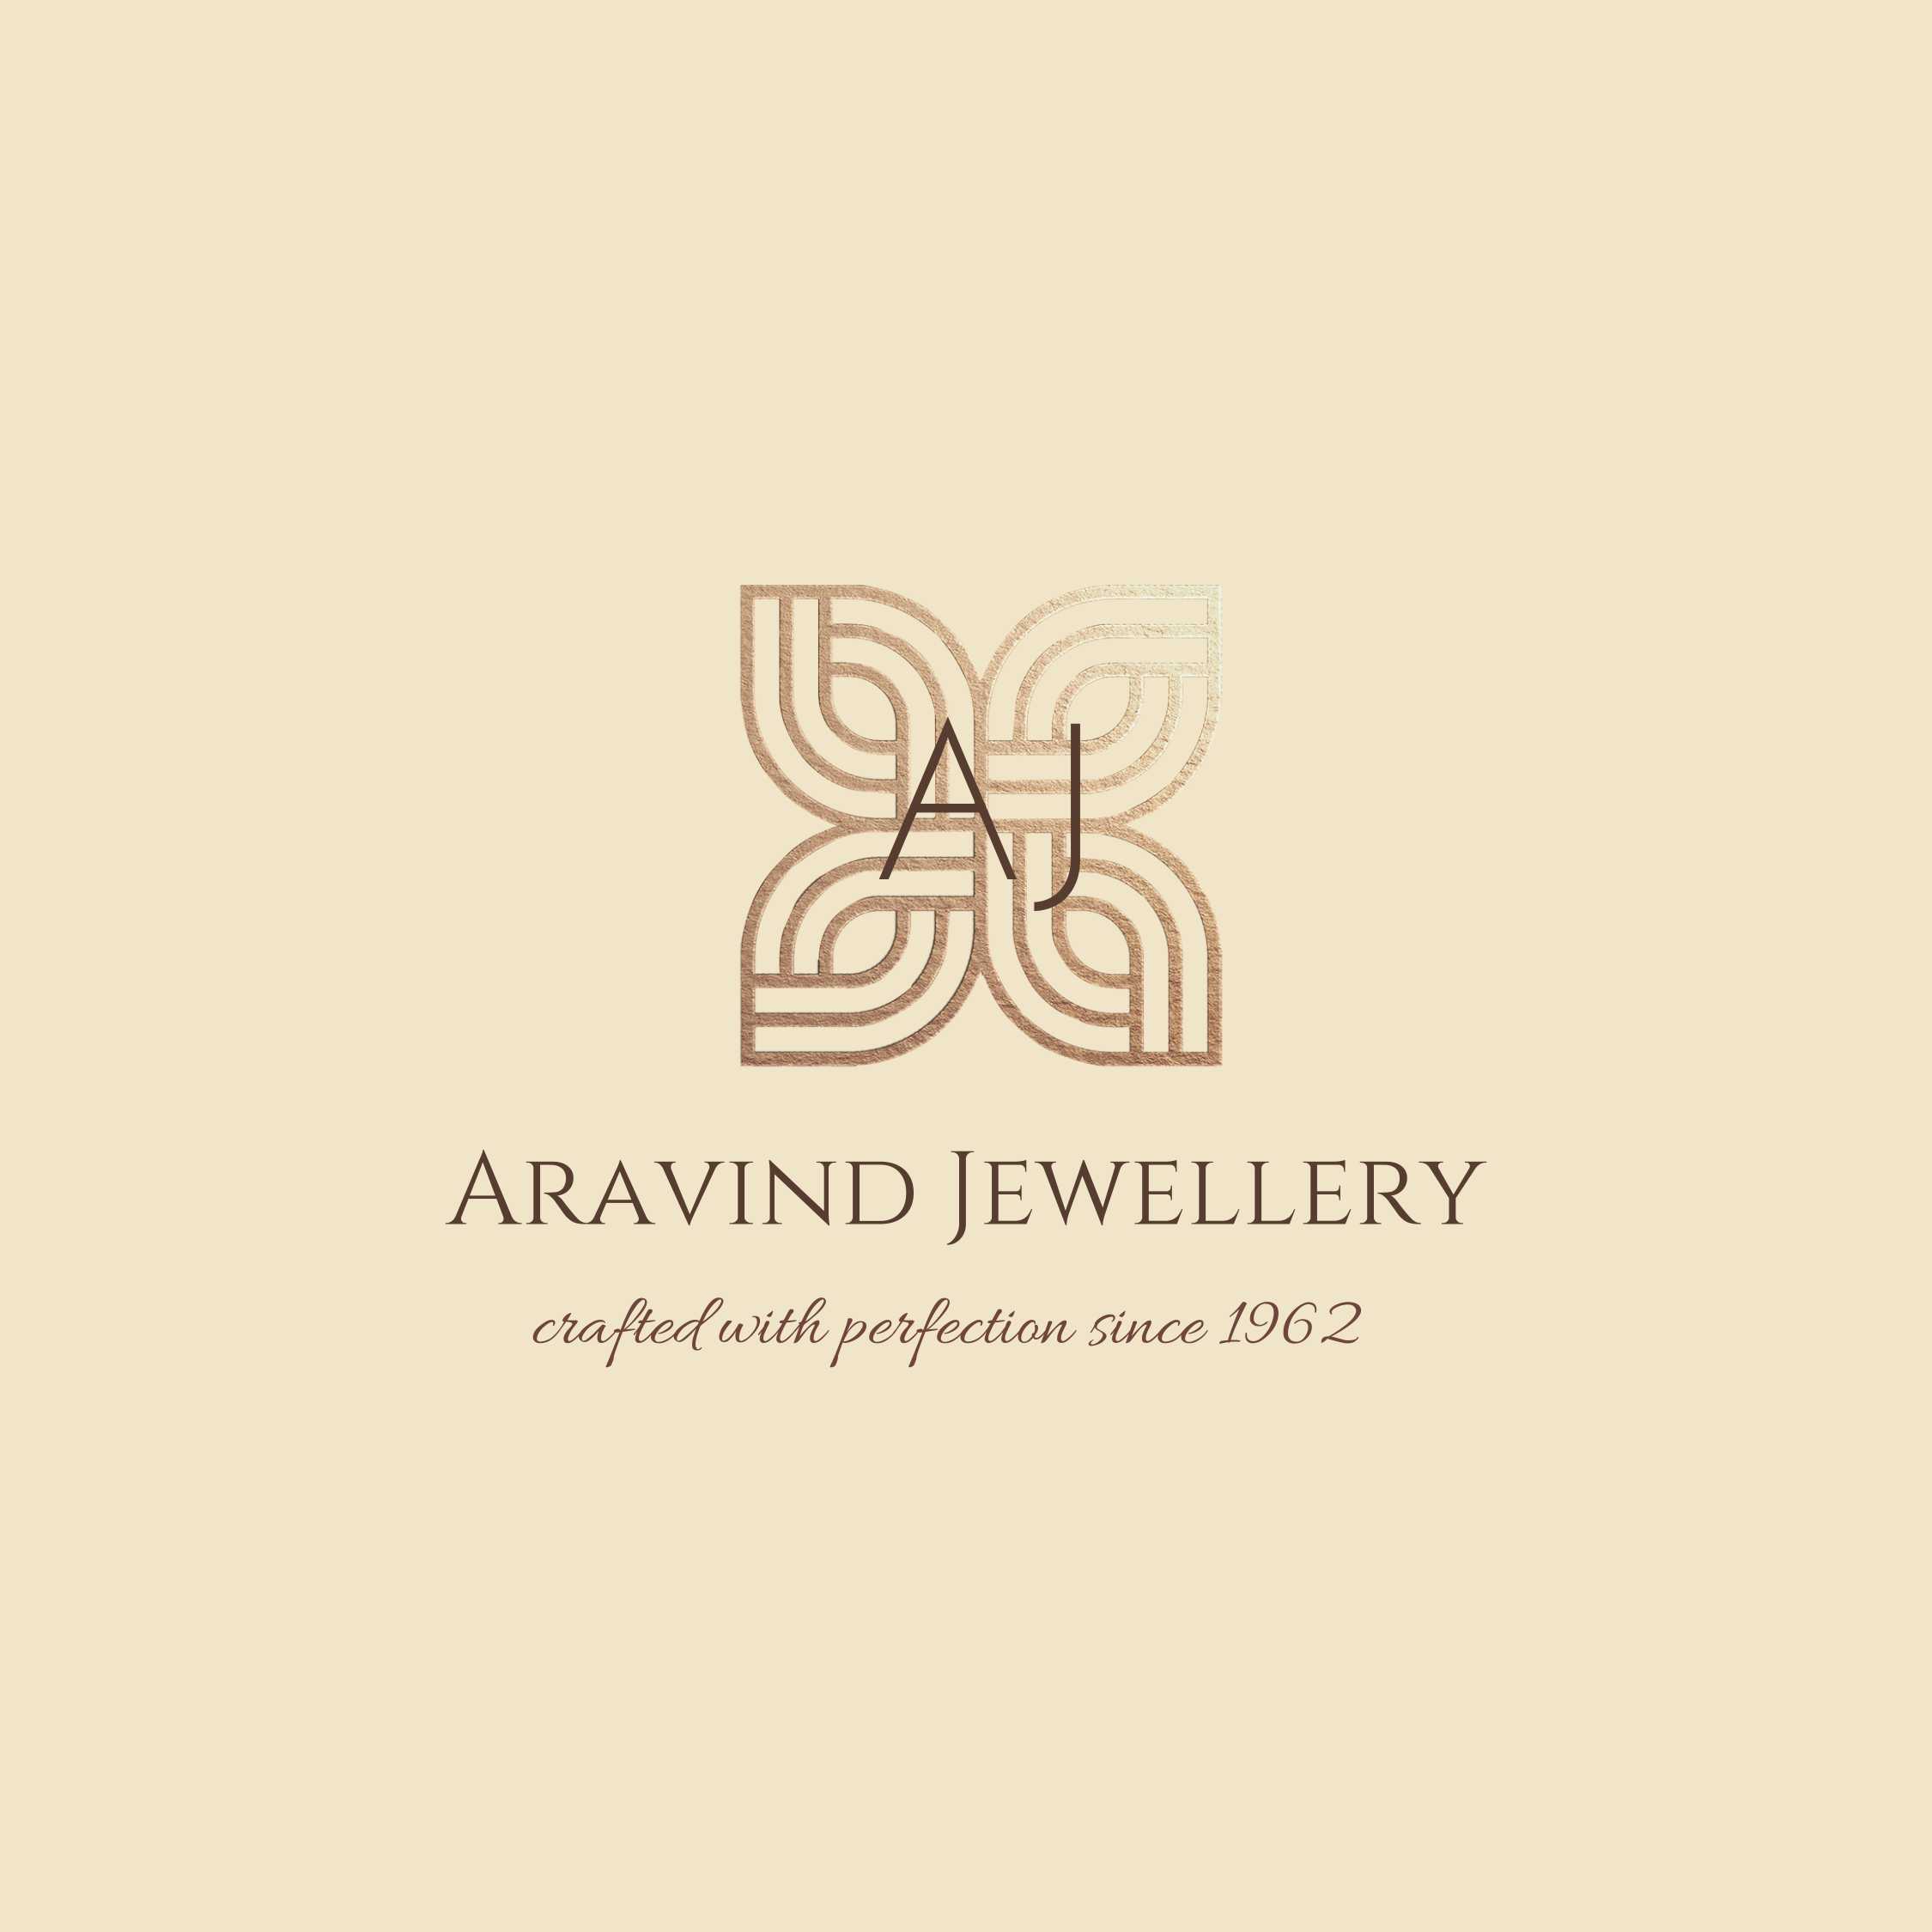 Aravind jewellery